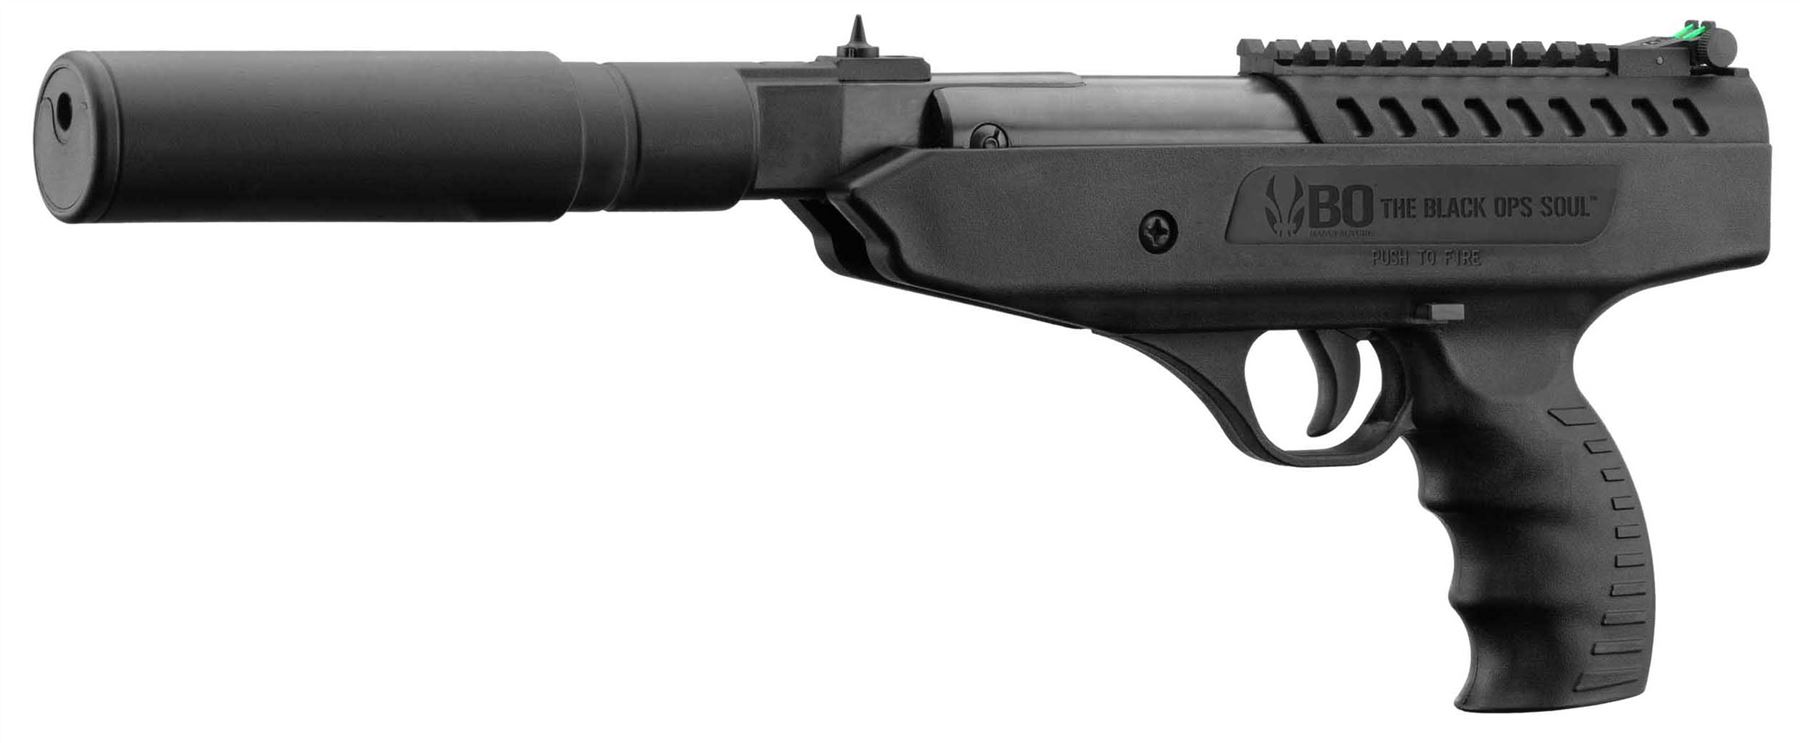 Bo Manufacture 5.5mm/.22 Langley Break Barrel Air Pistol with Silencer (7.5j – Black)